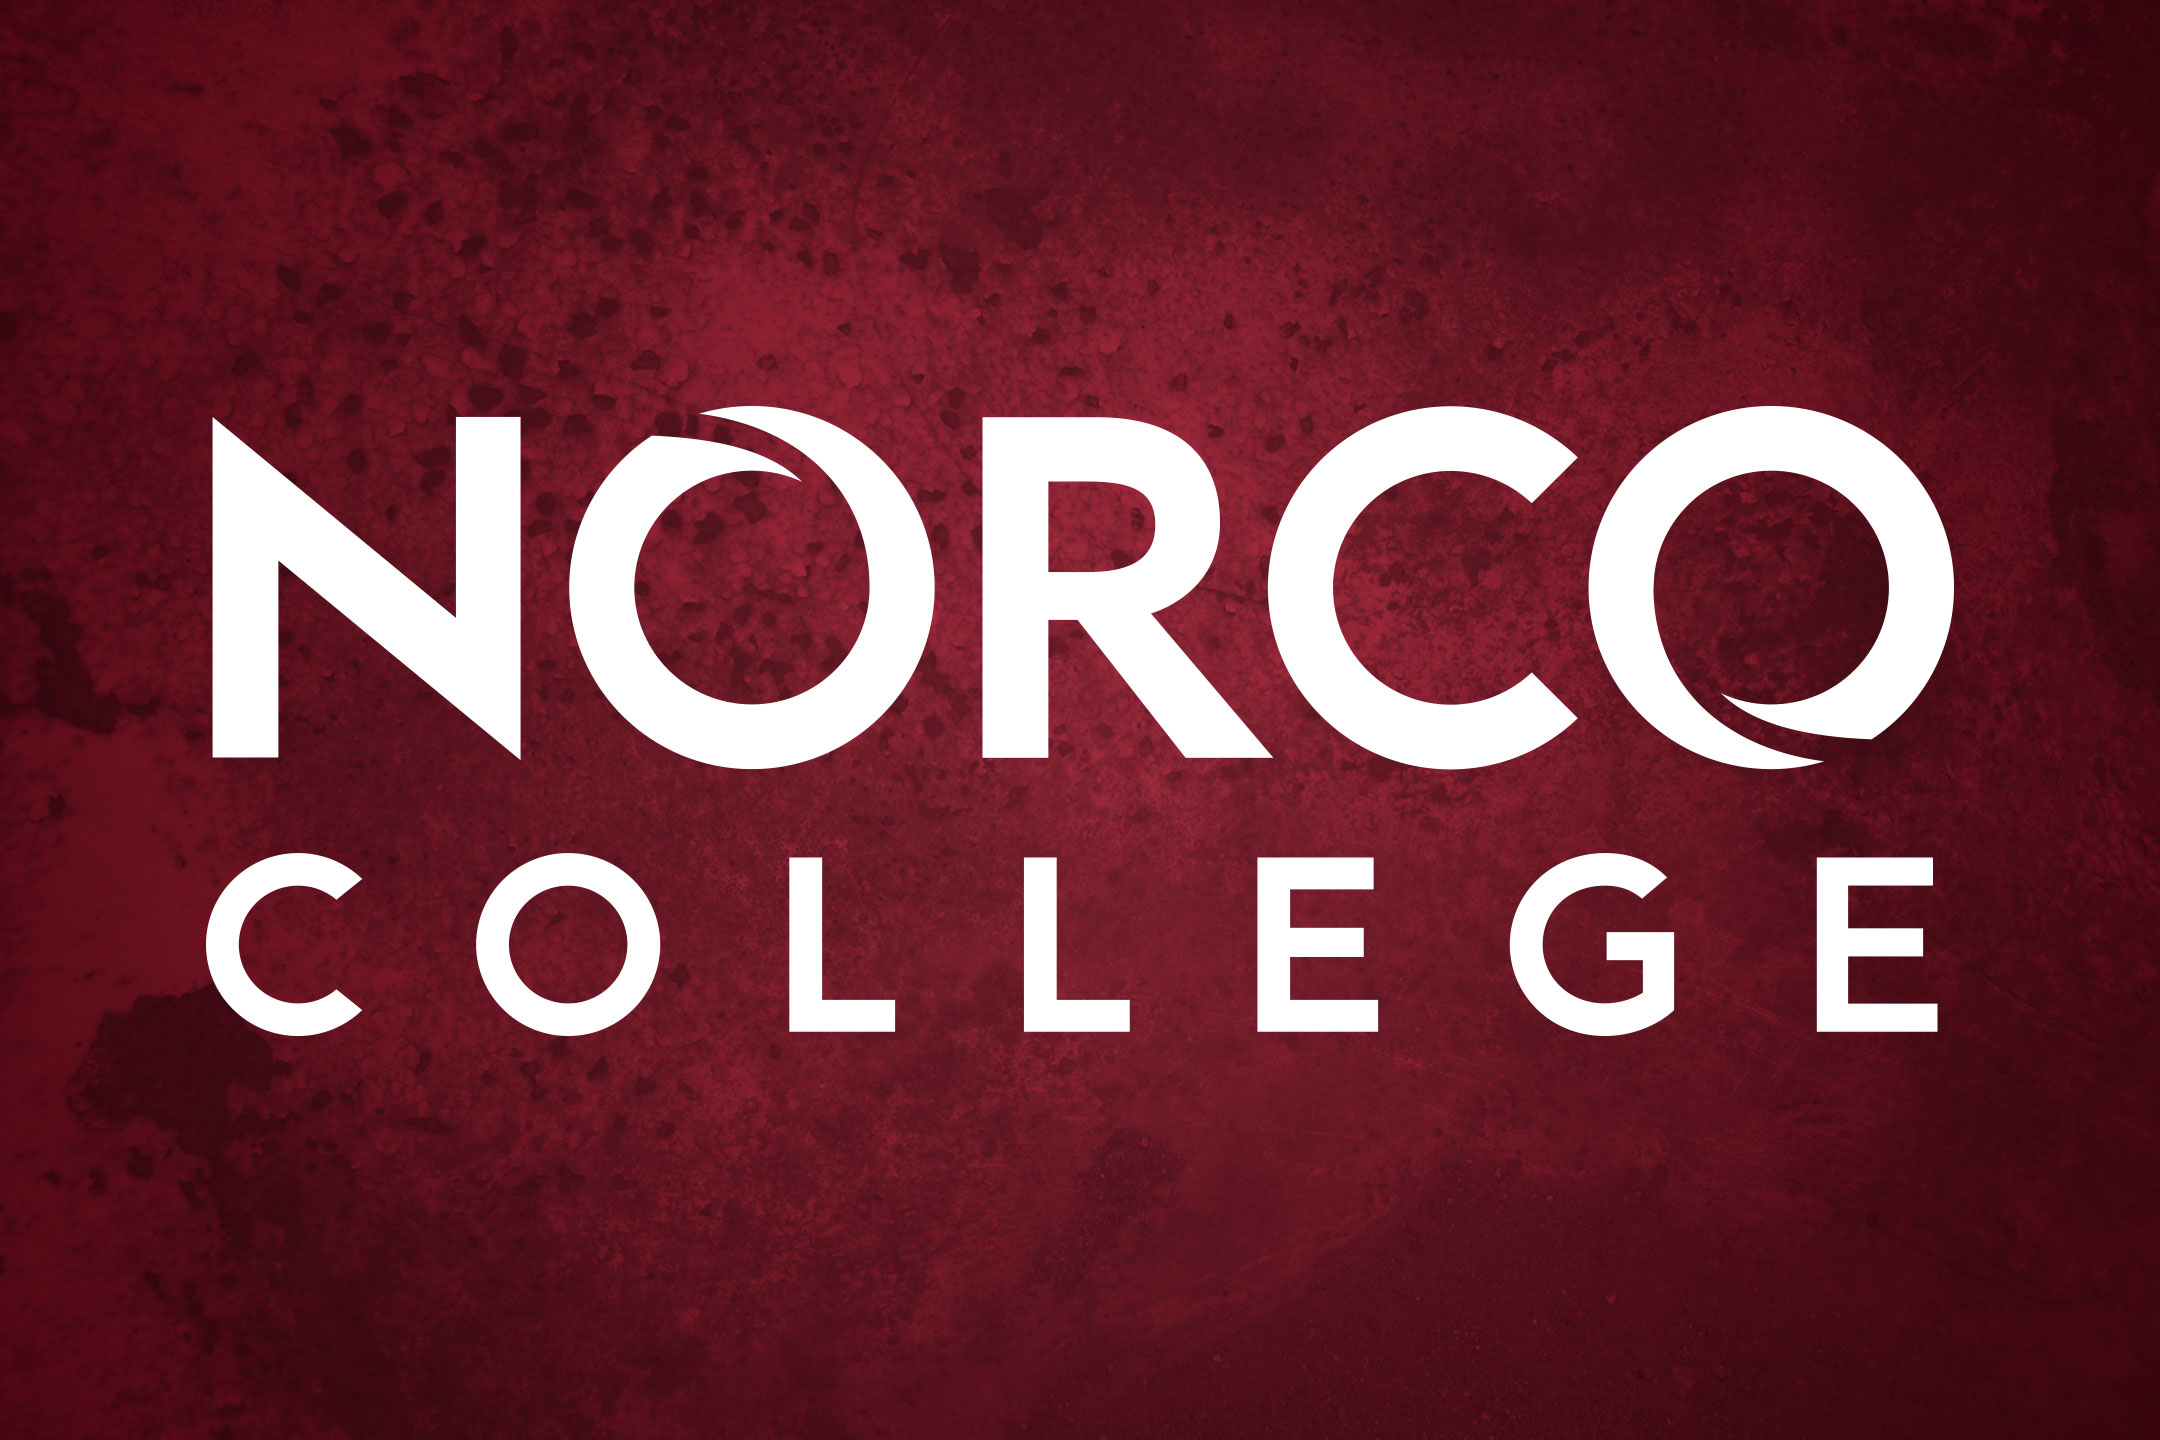 Norco College wallpaper